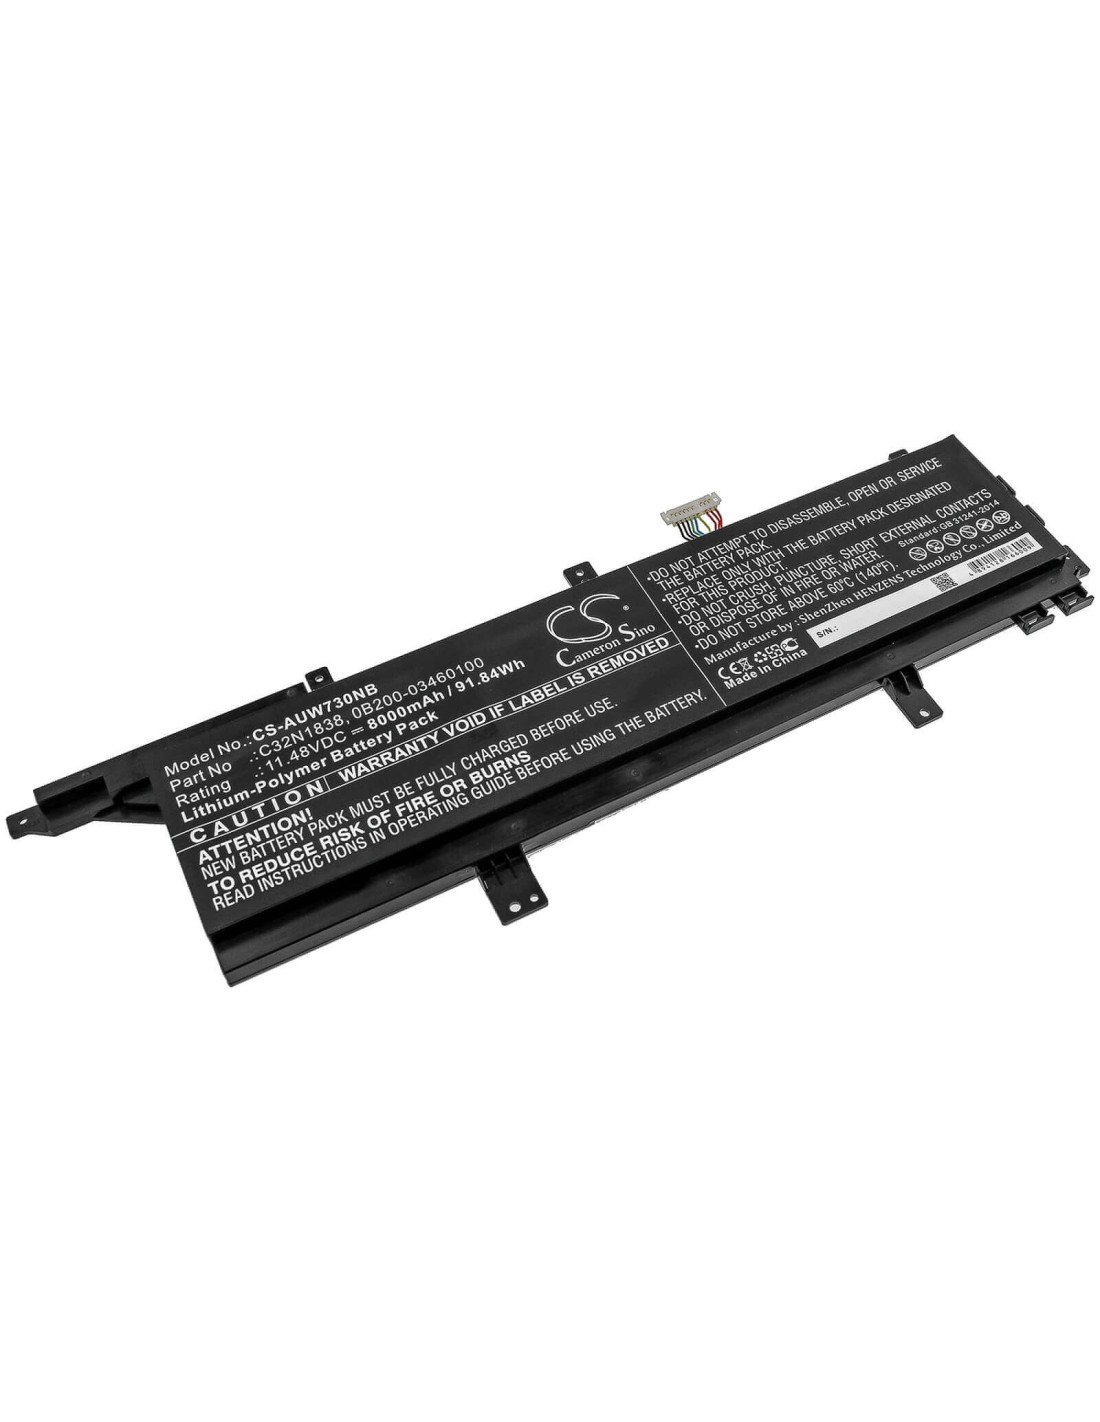 Battery for Asus, Proart Studiobook Pro X W730g5t 11.48V, 8000mAh - 91.84Wh